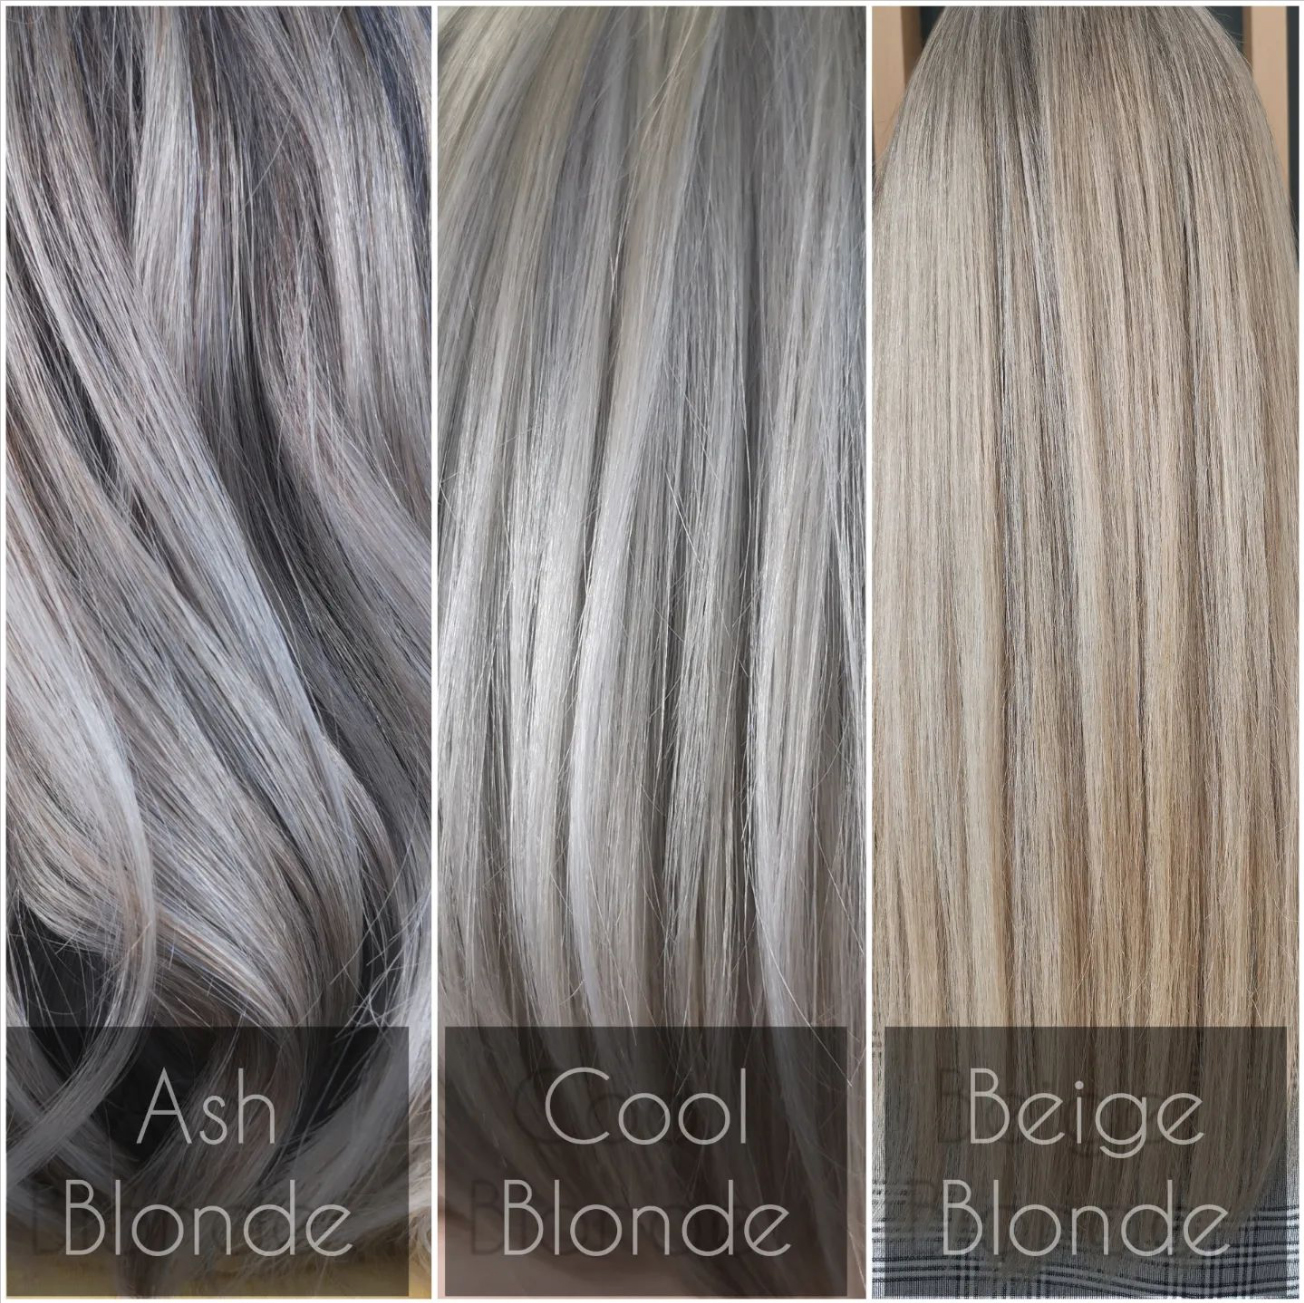 koloryzacja ash blonde, cool blonde, beige blonde białystok